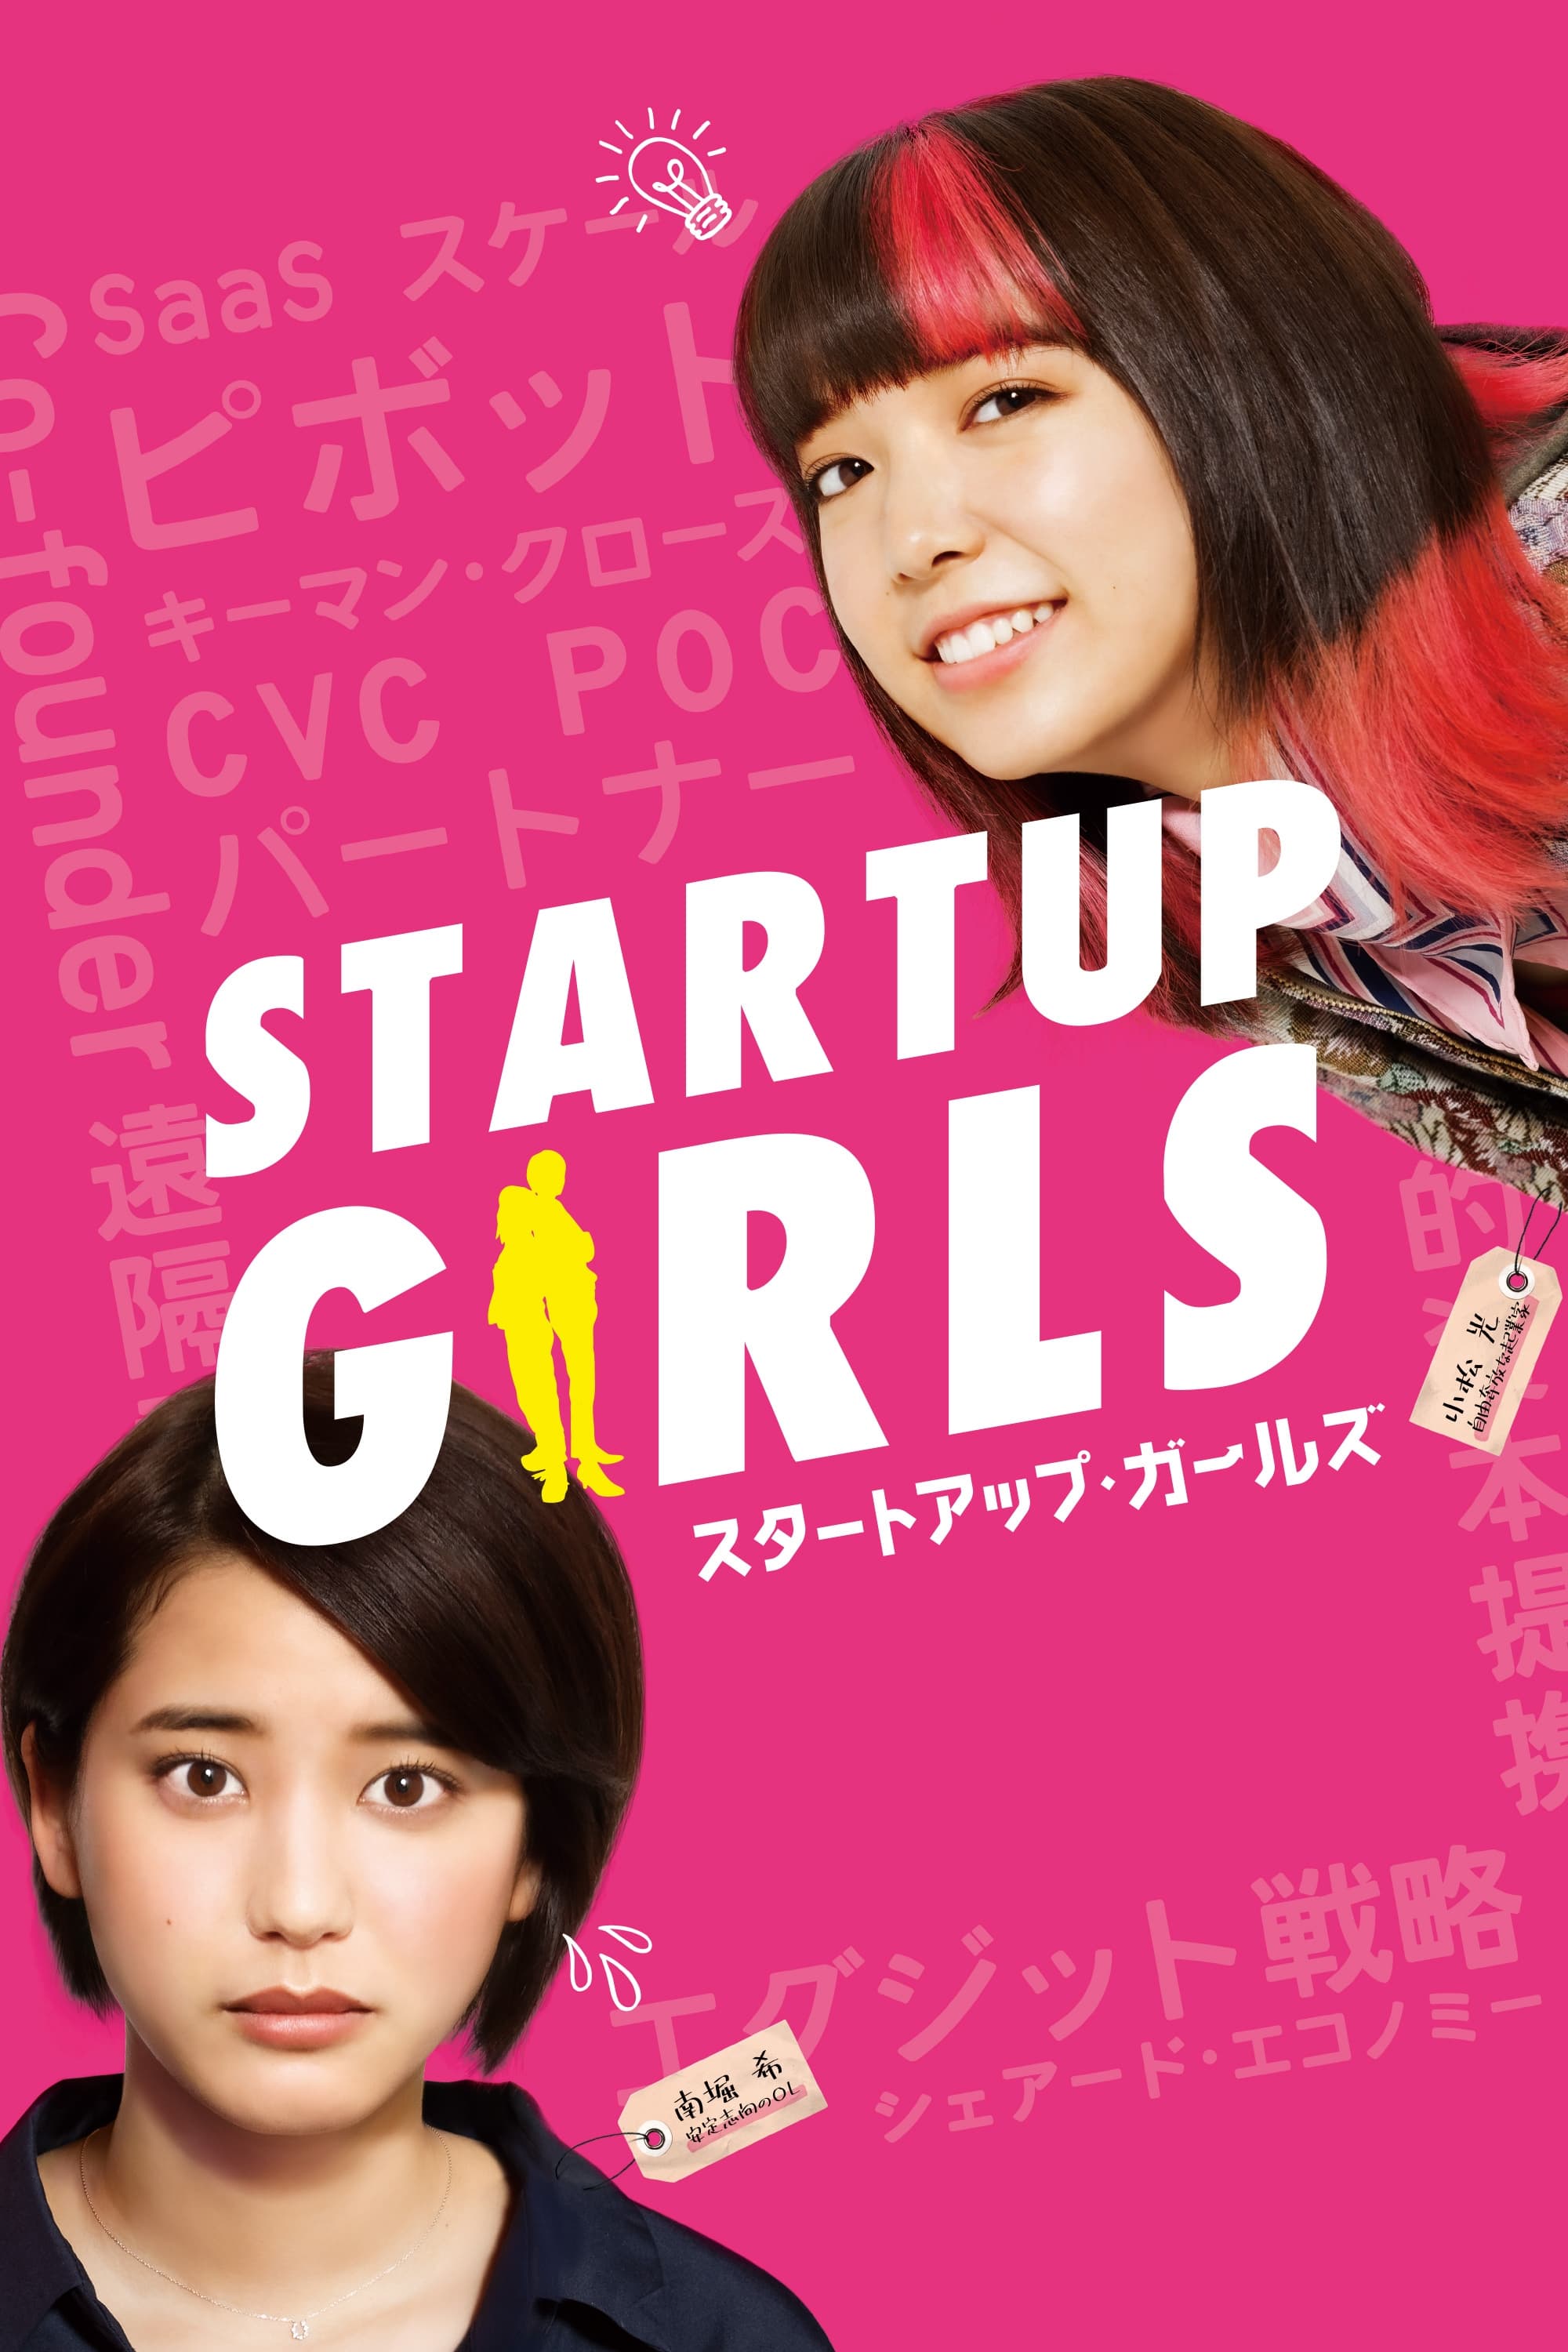 Startup Girls